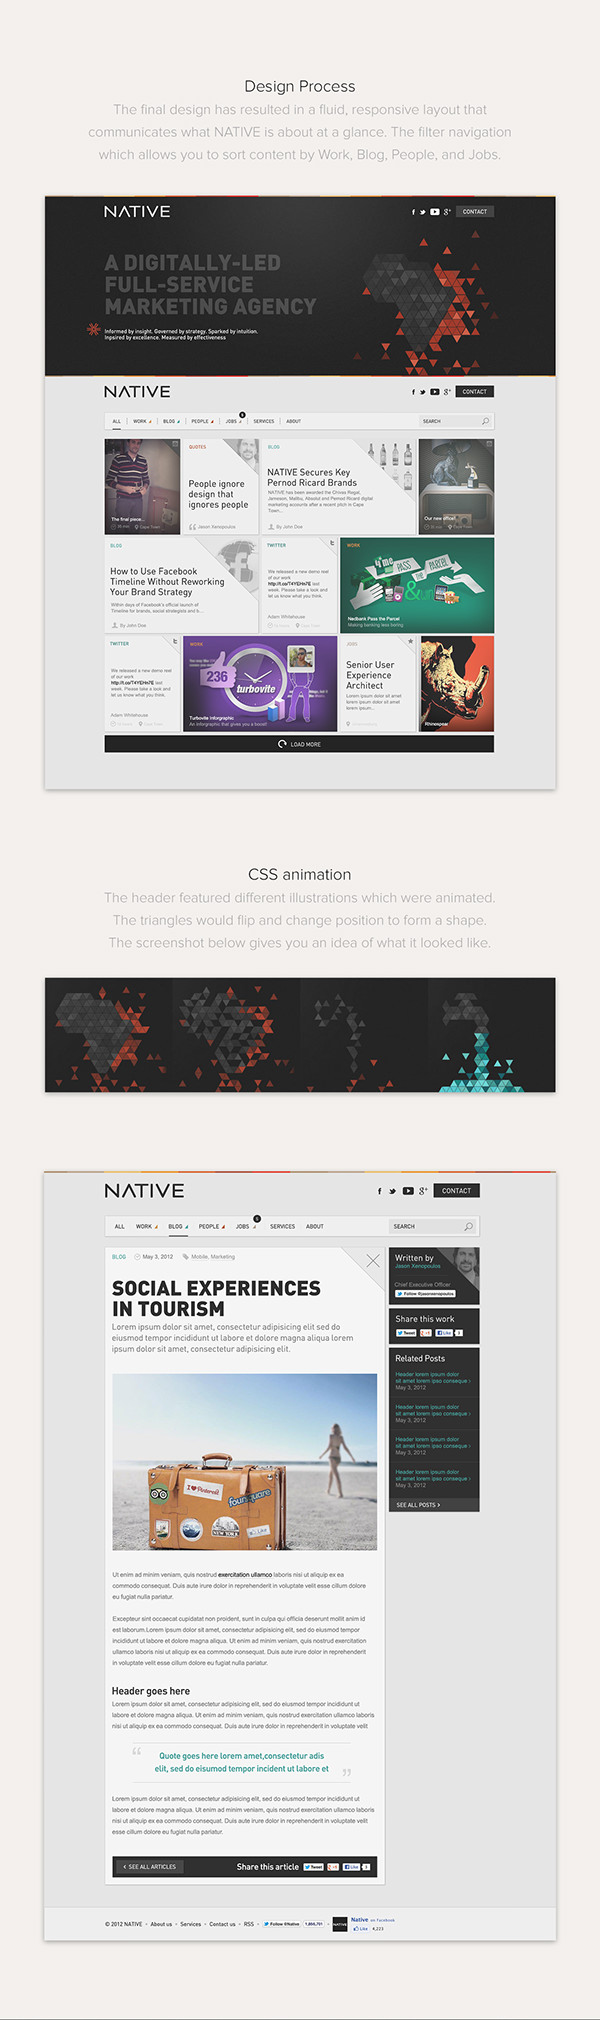 Redesign of a digital agency's website